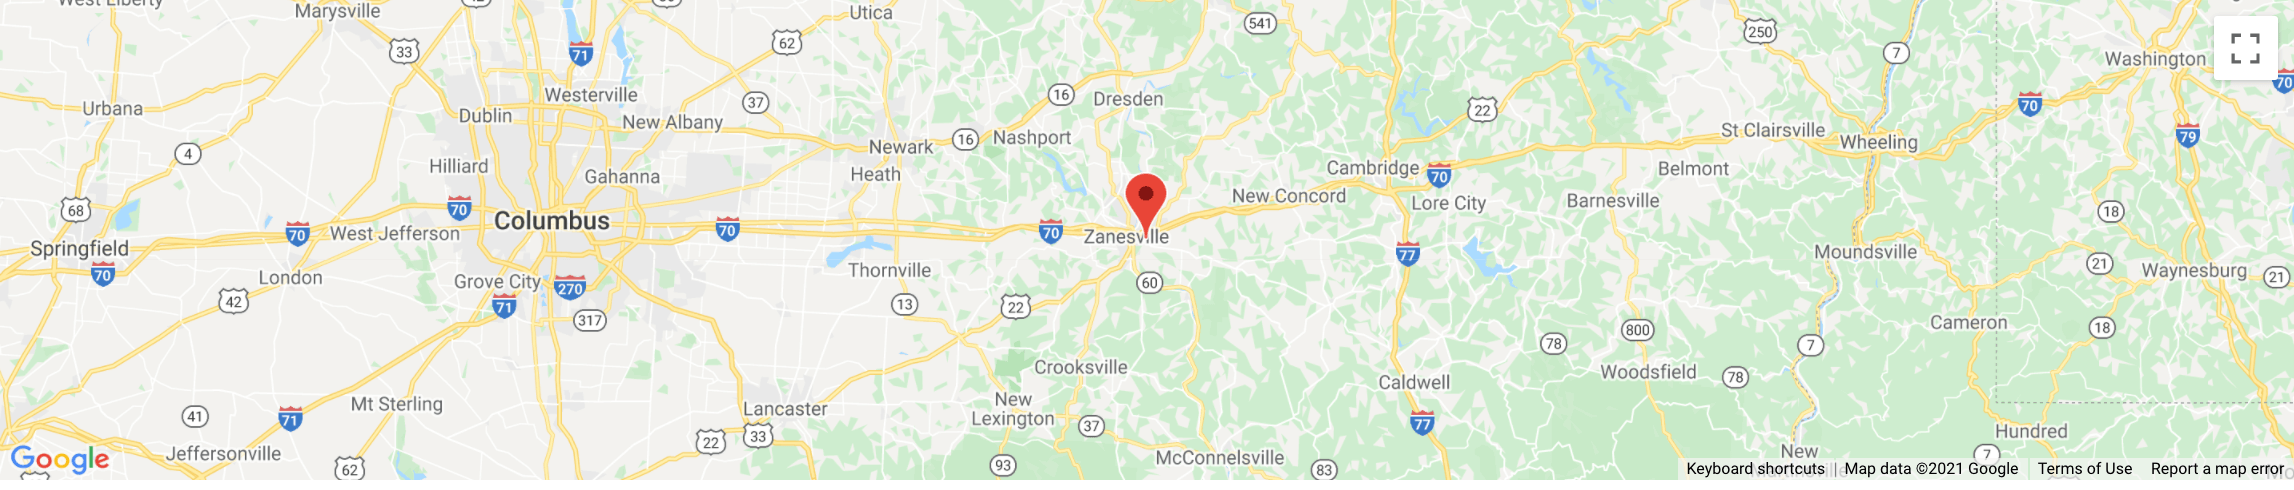 zanesville-east-map